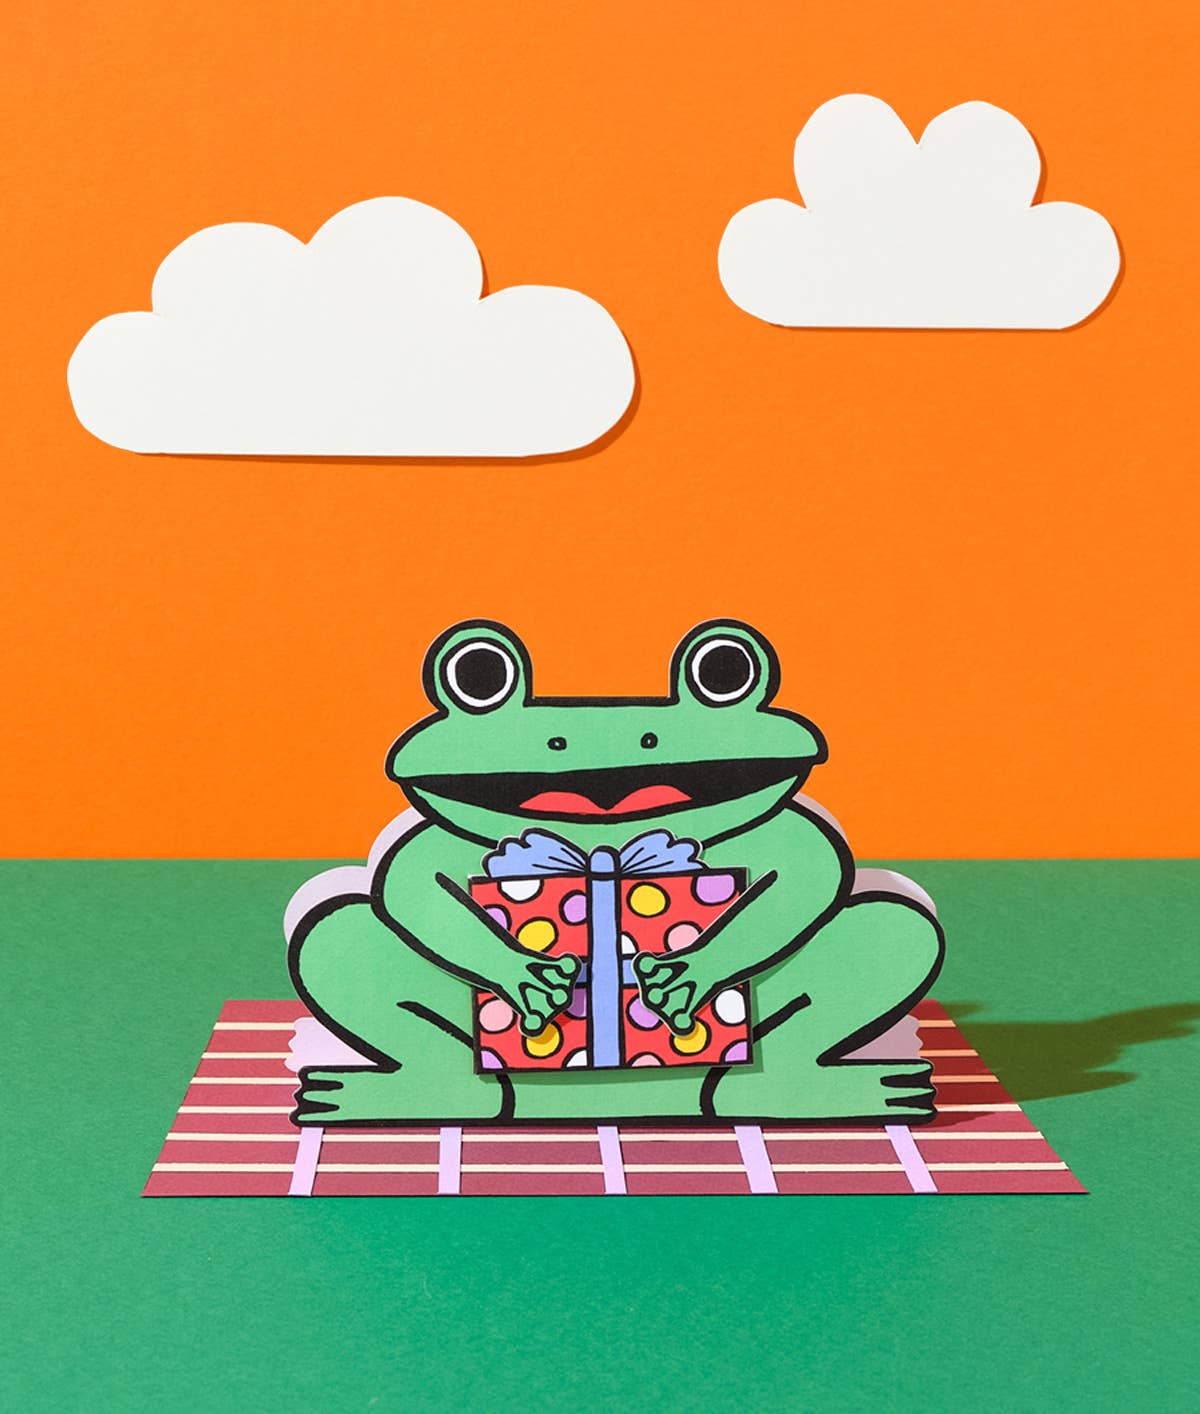 Wrap - 'Frog with Mini Card' Kid's Greetings Card - Preston ApothecaryWrap